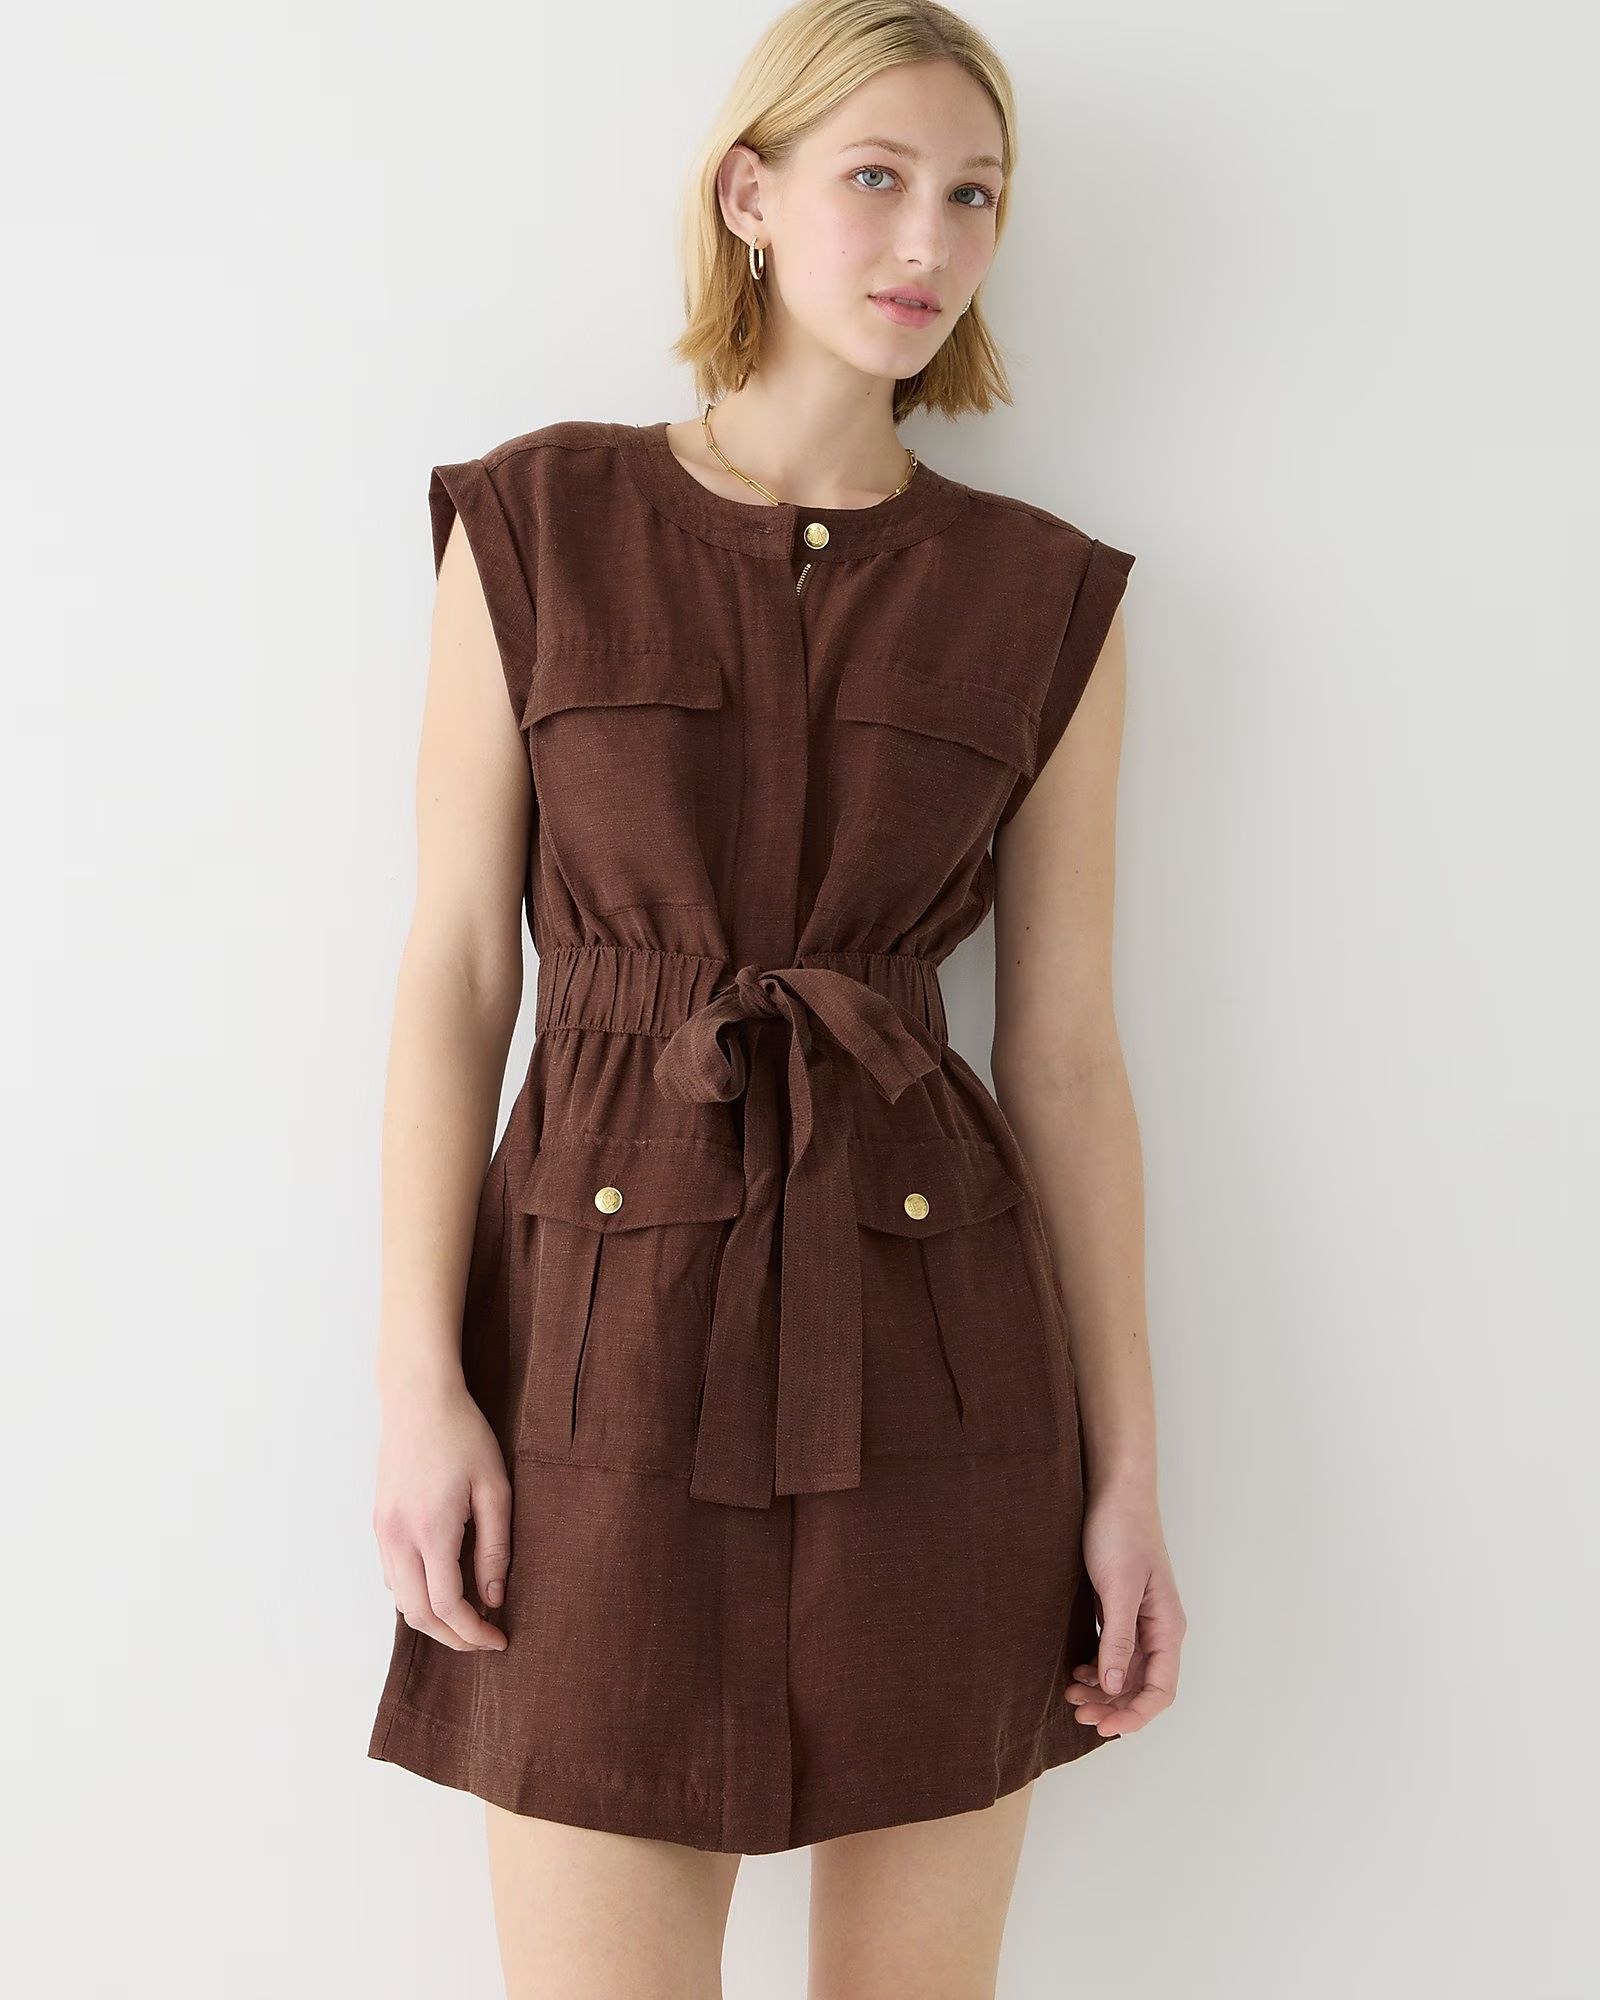 Tie-waist mini dress in Chelsea linen-cupro blend | J.Crew US